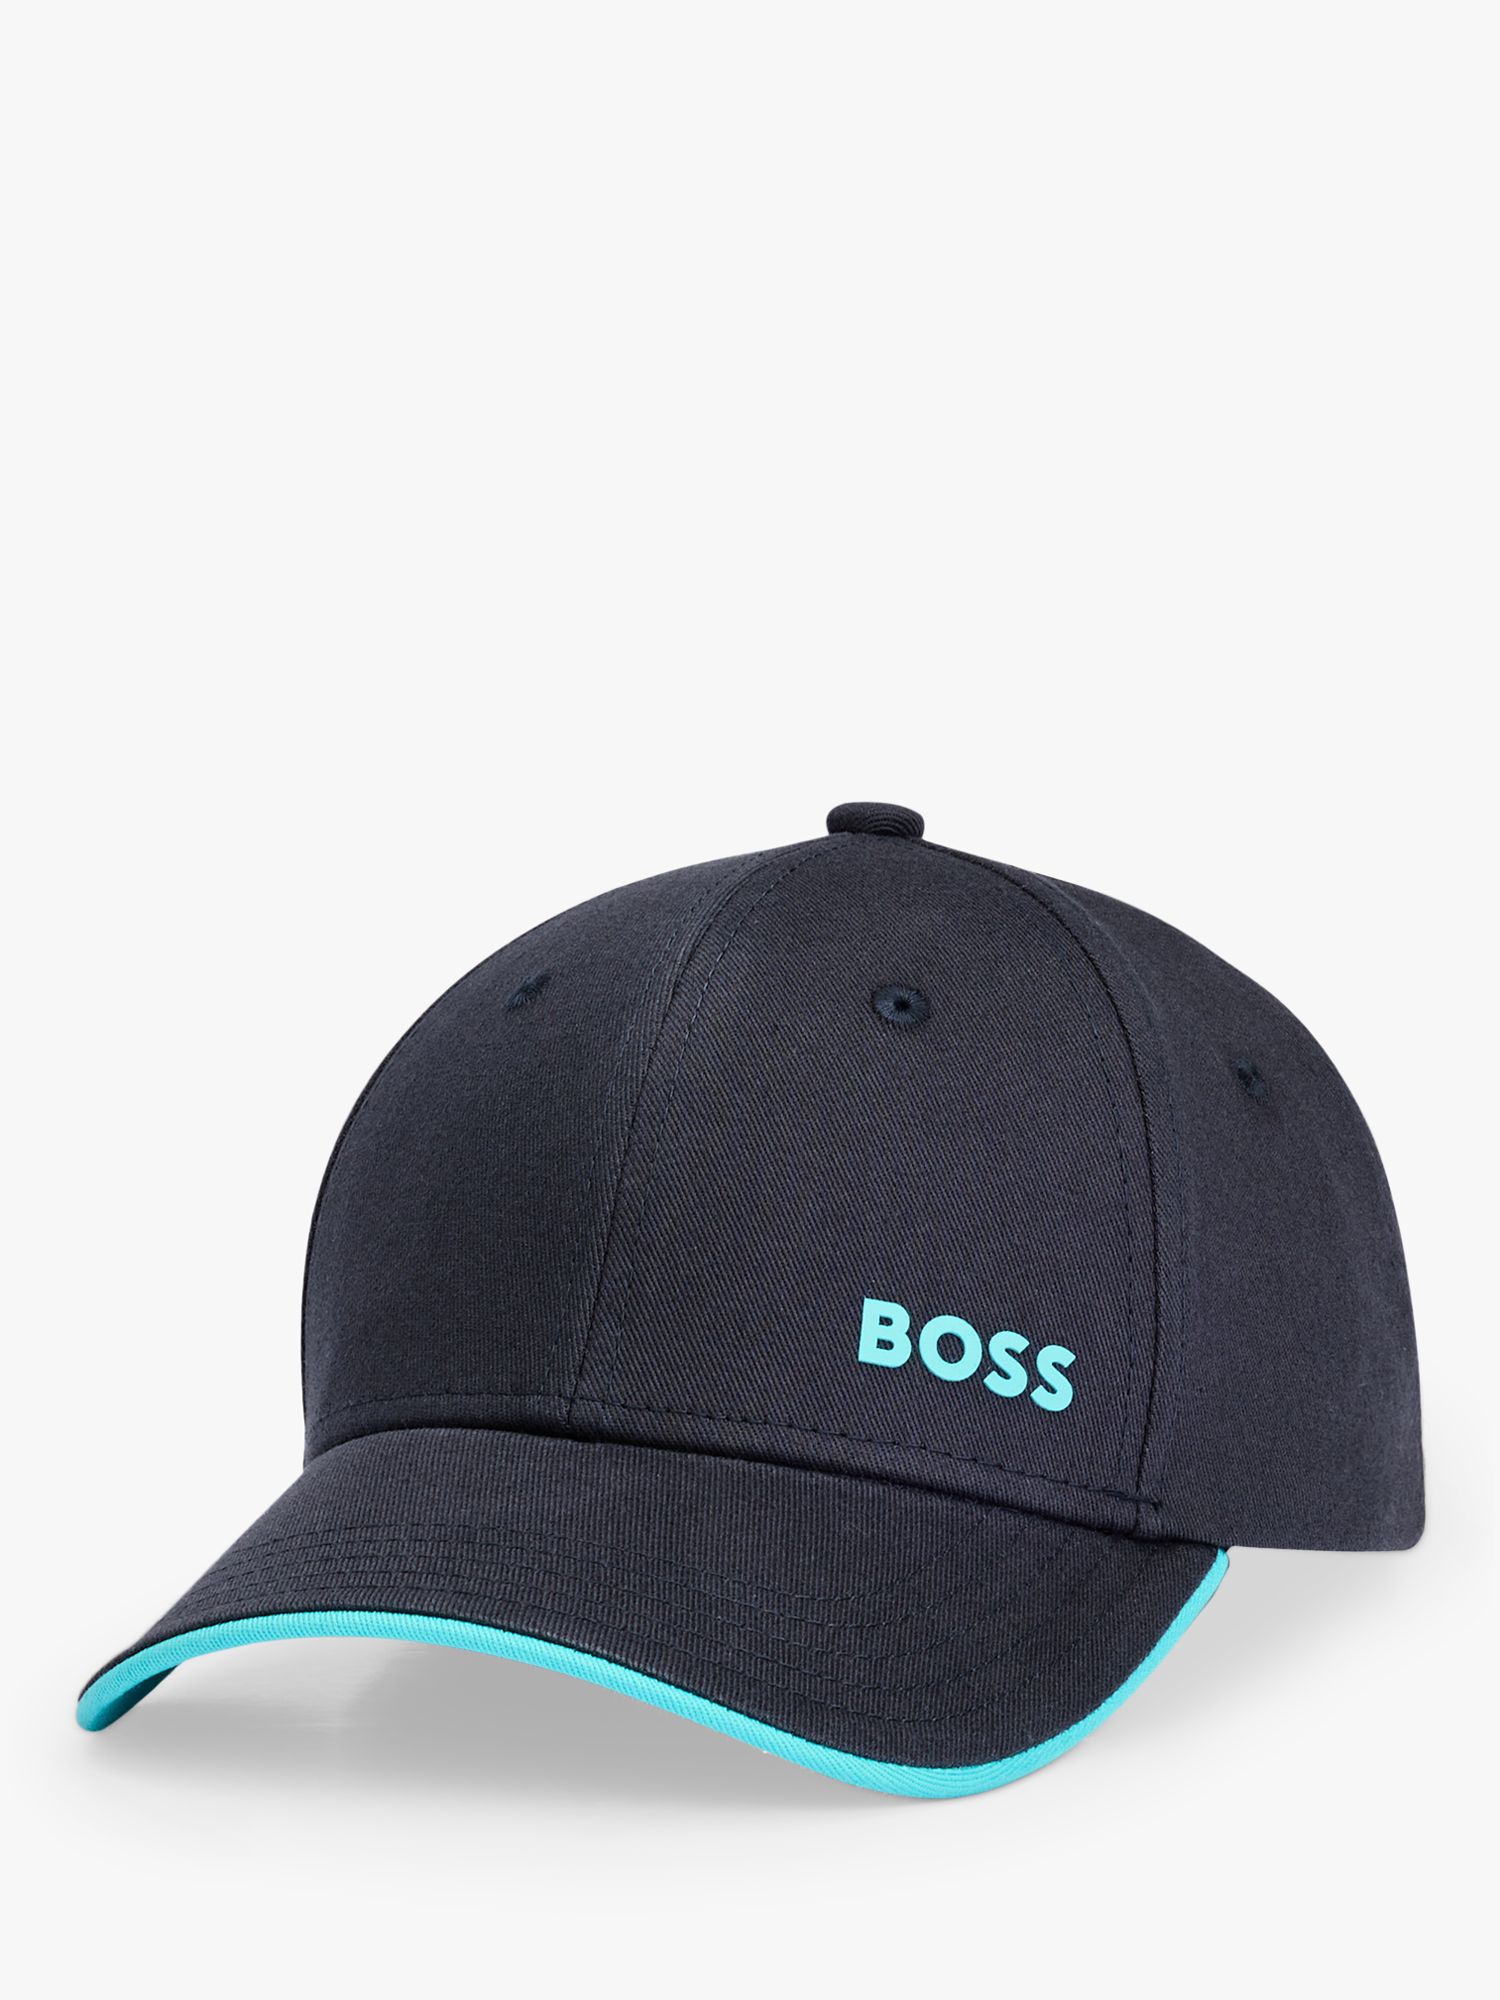 HUGO BOSS Logo Baseball Cotton Cap, Dark Blue, One Size